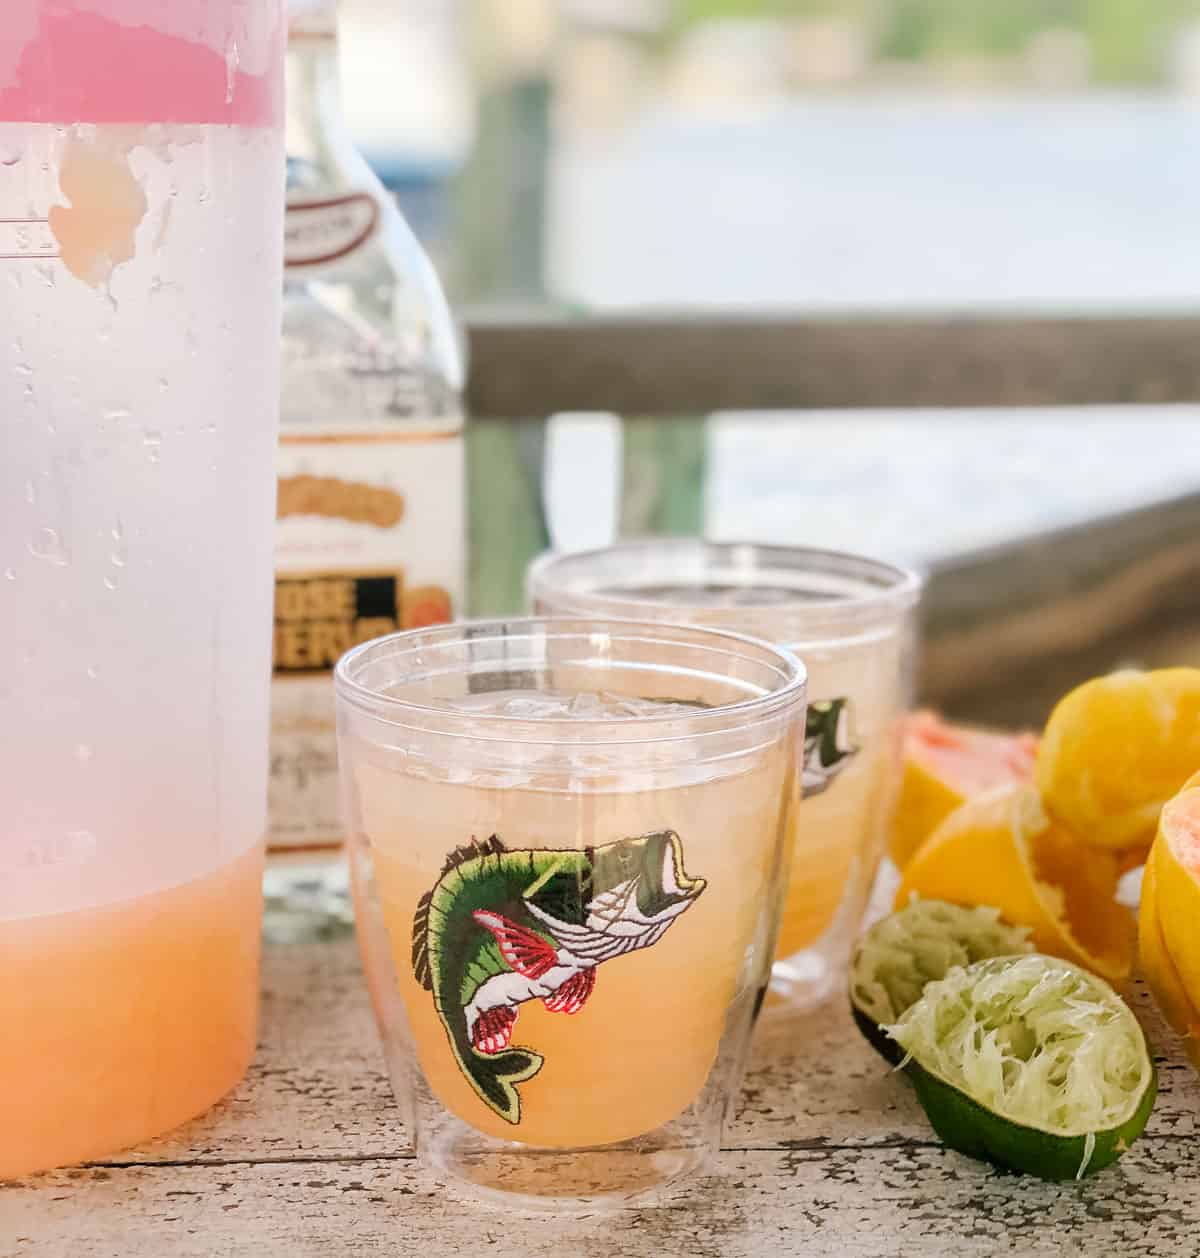 pitcher of grapefruit margaritas, bottle of tequila, glasses of pink margaritas, limes and lemons.